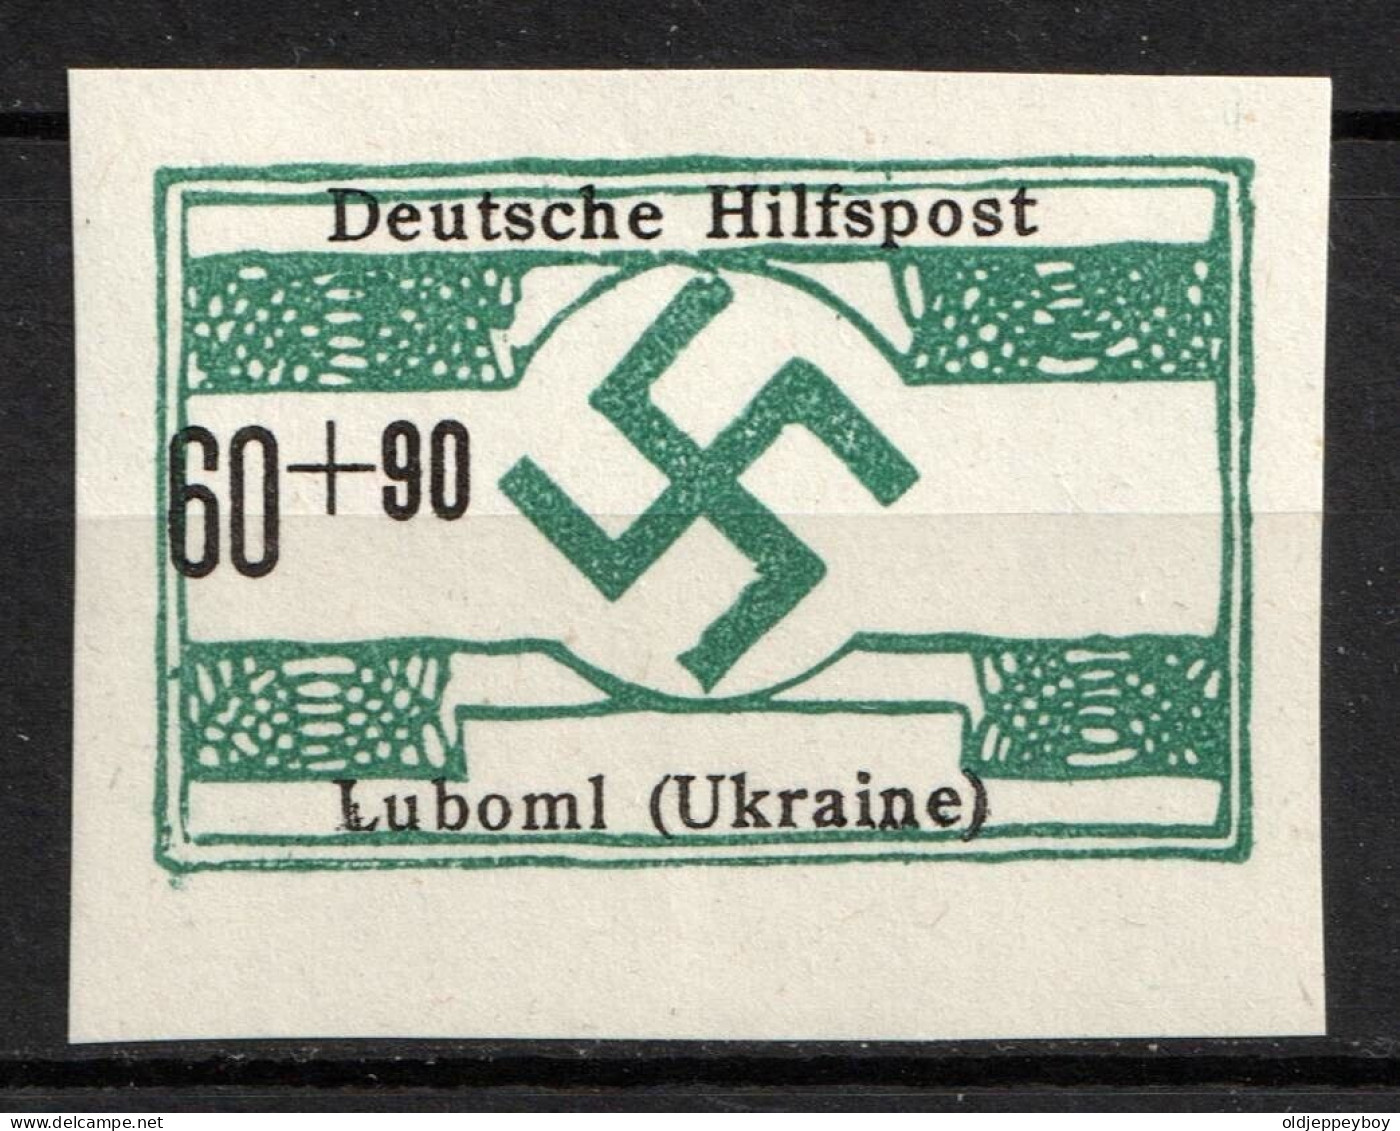 SWASTIKA NAZI 1944 60+90pf Luboml, German Occupation Of Ukraine, "Deutsche Hilfspost / Lubolm (Ukraine)" - Yv N°11 - 1941-43 Occupation: Germany